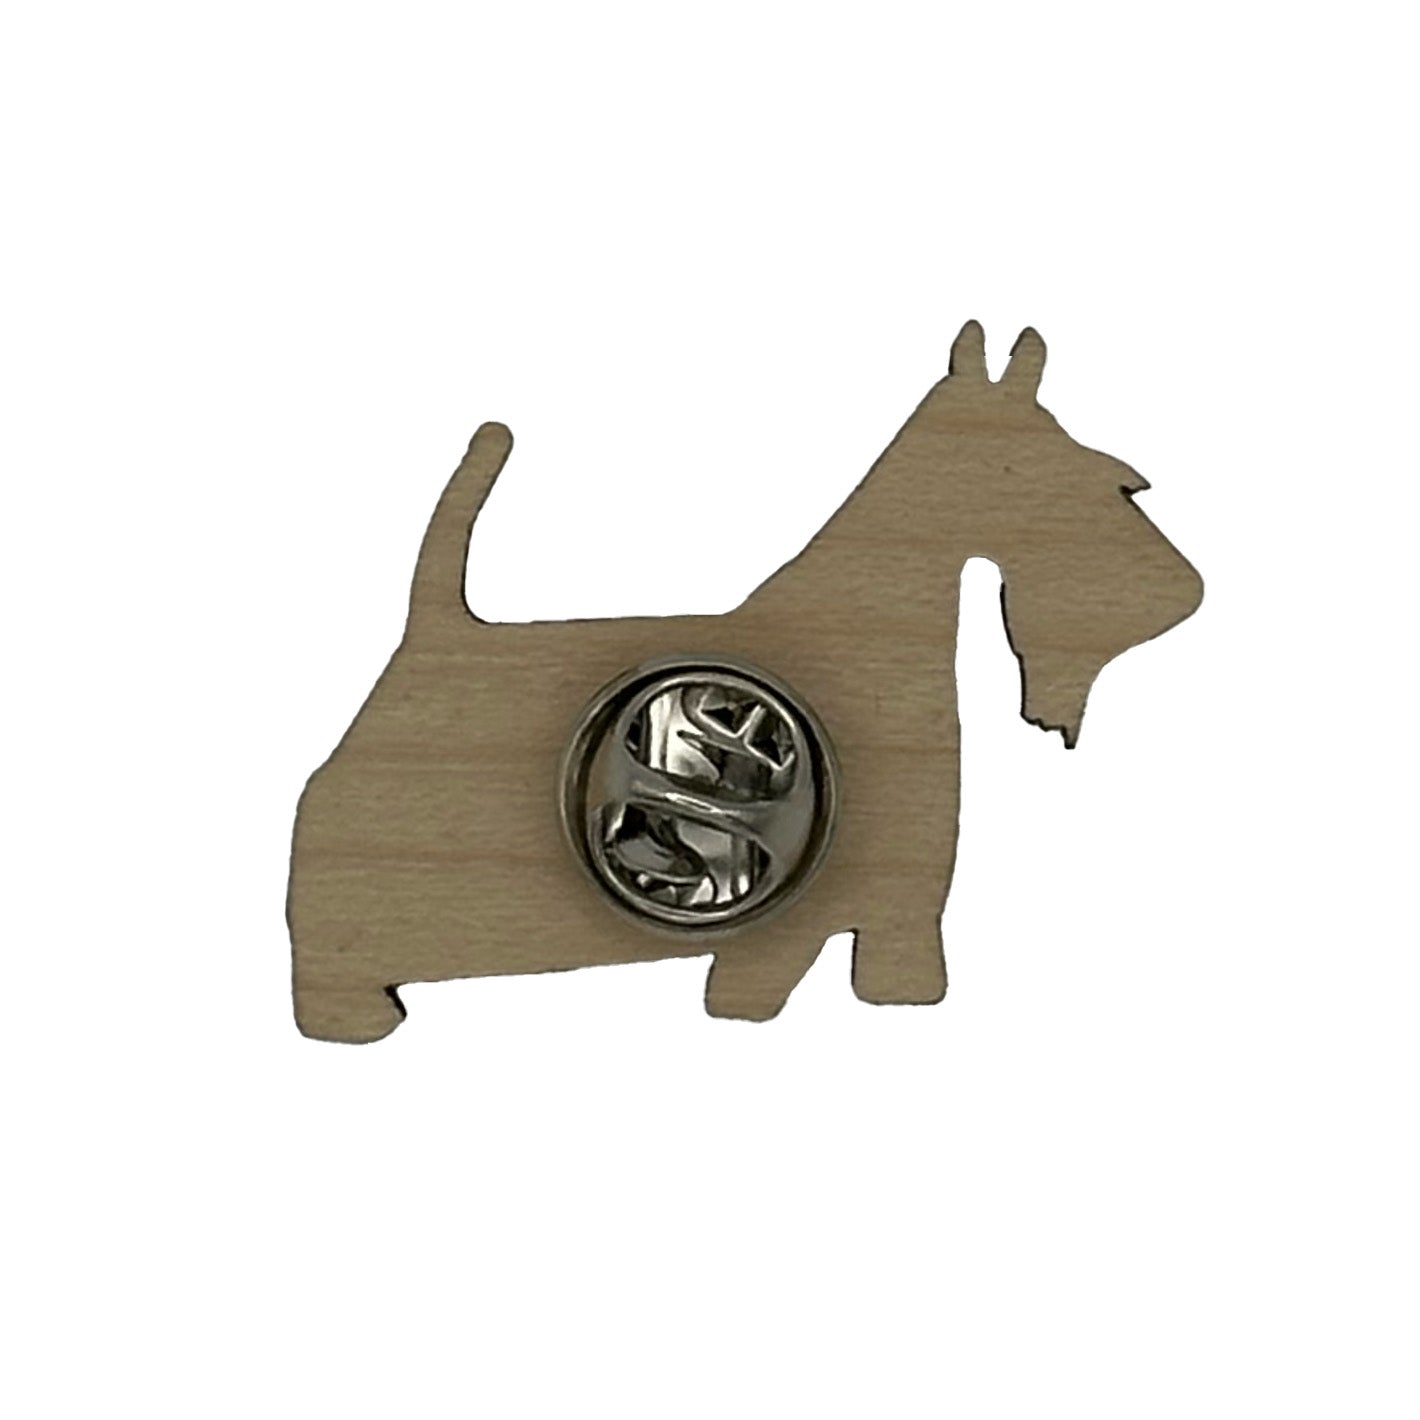 Scottish Terrier Wooden pin badge showing reverse